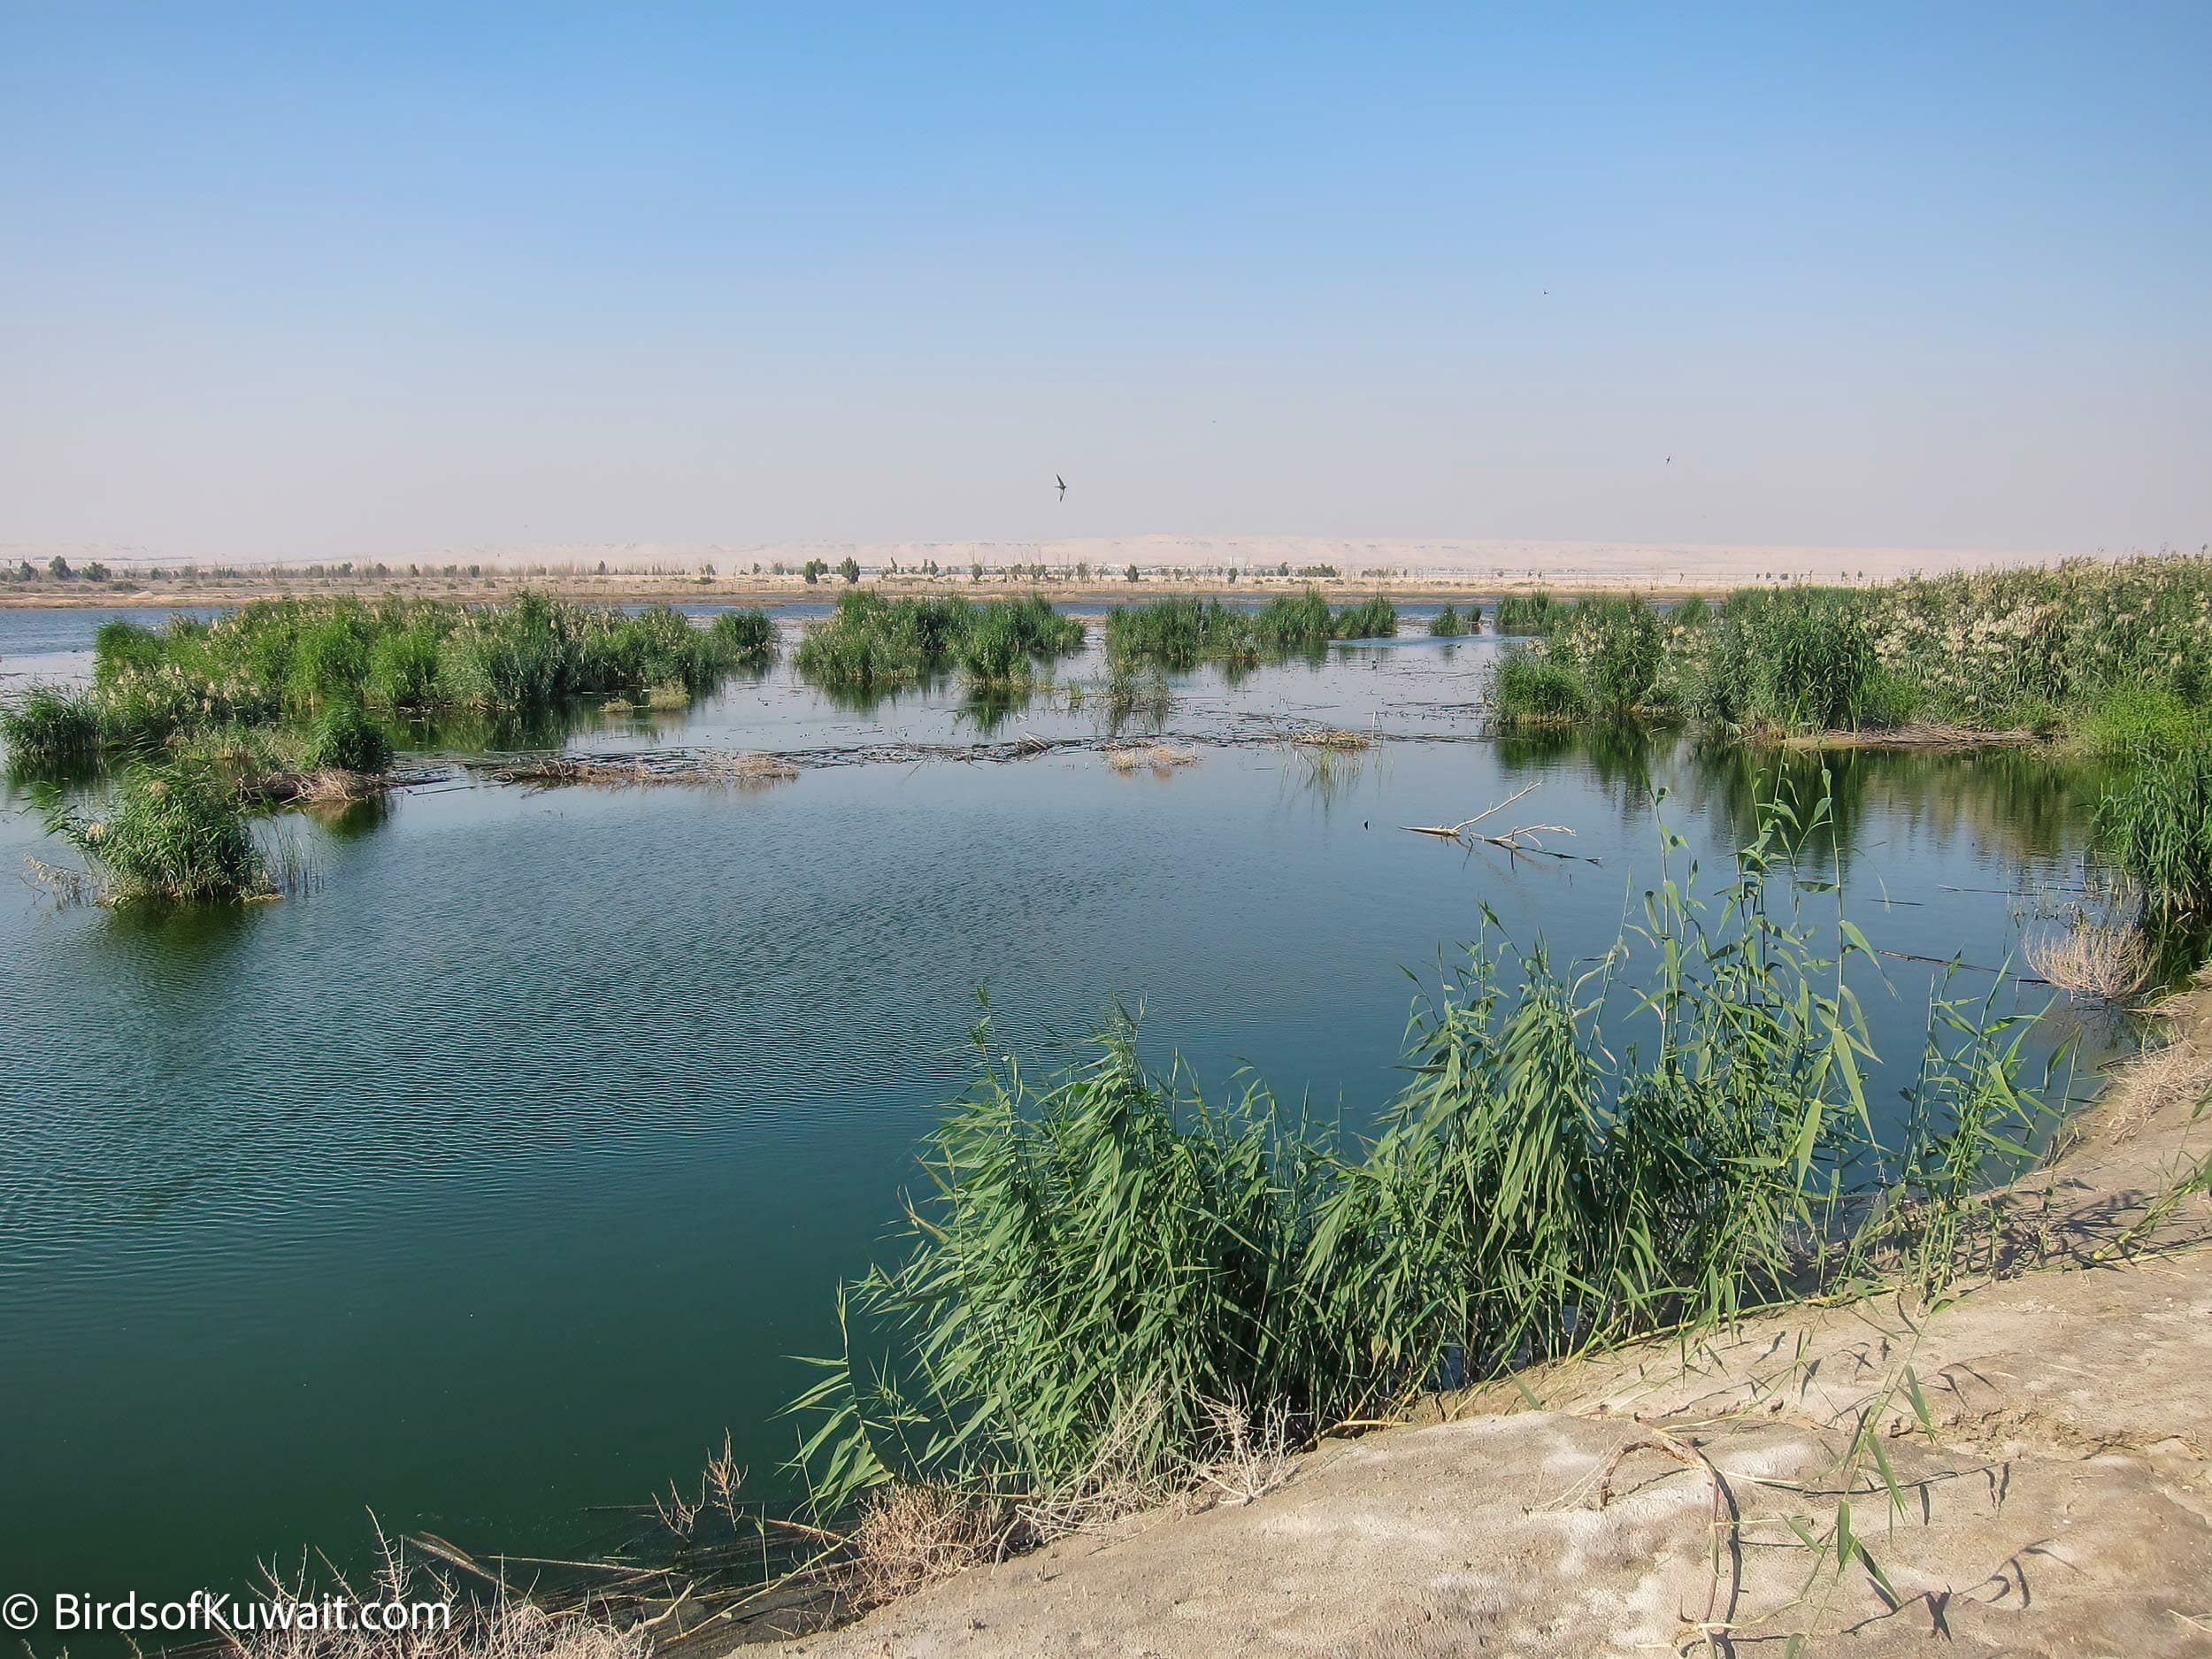 Birdwatching Sites in Kuwait: Jahra Pools Reserve